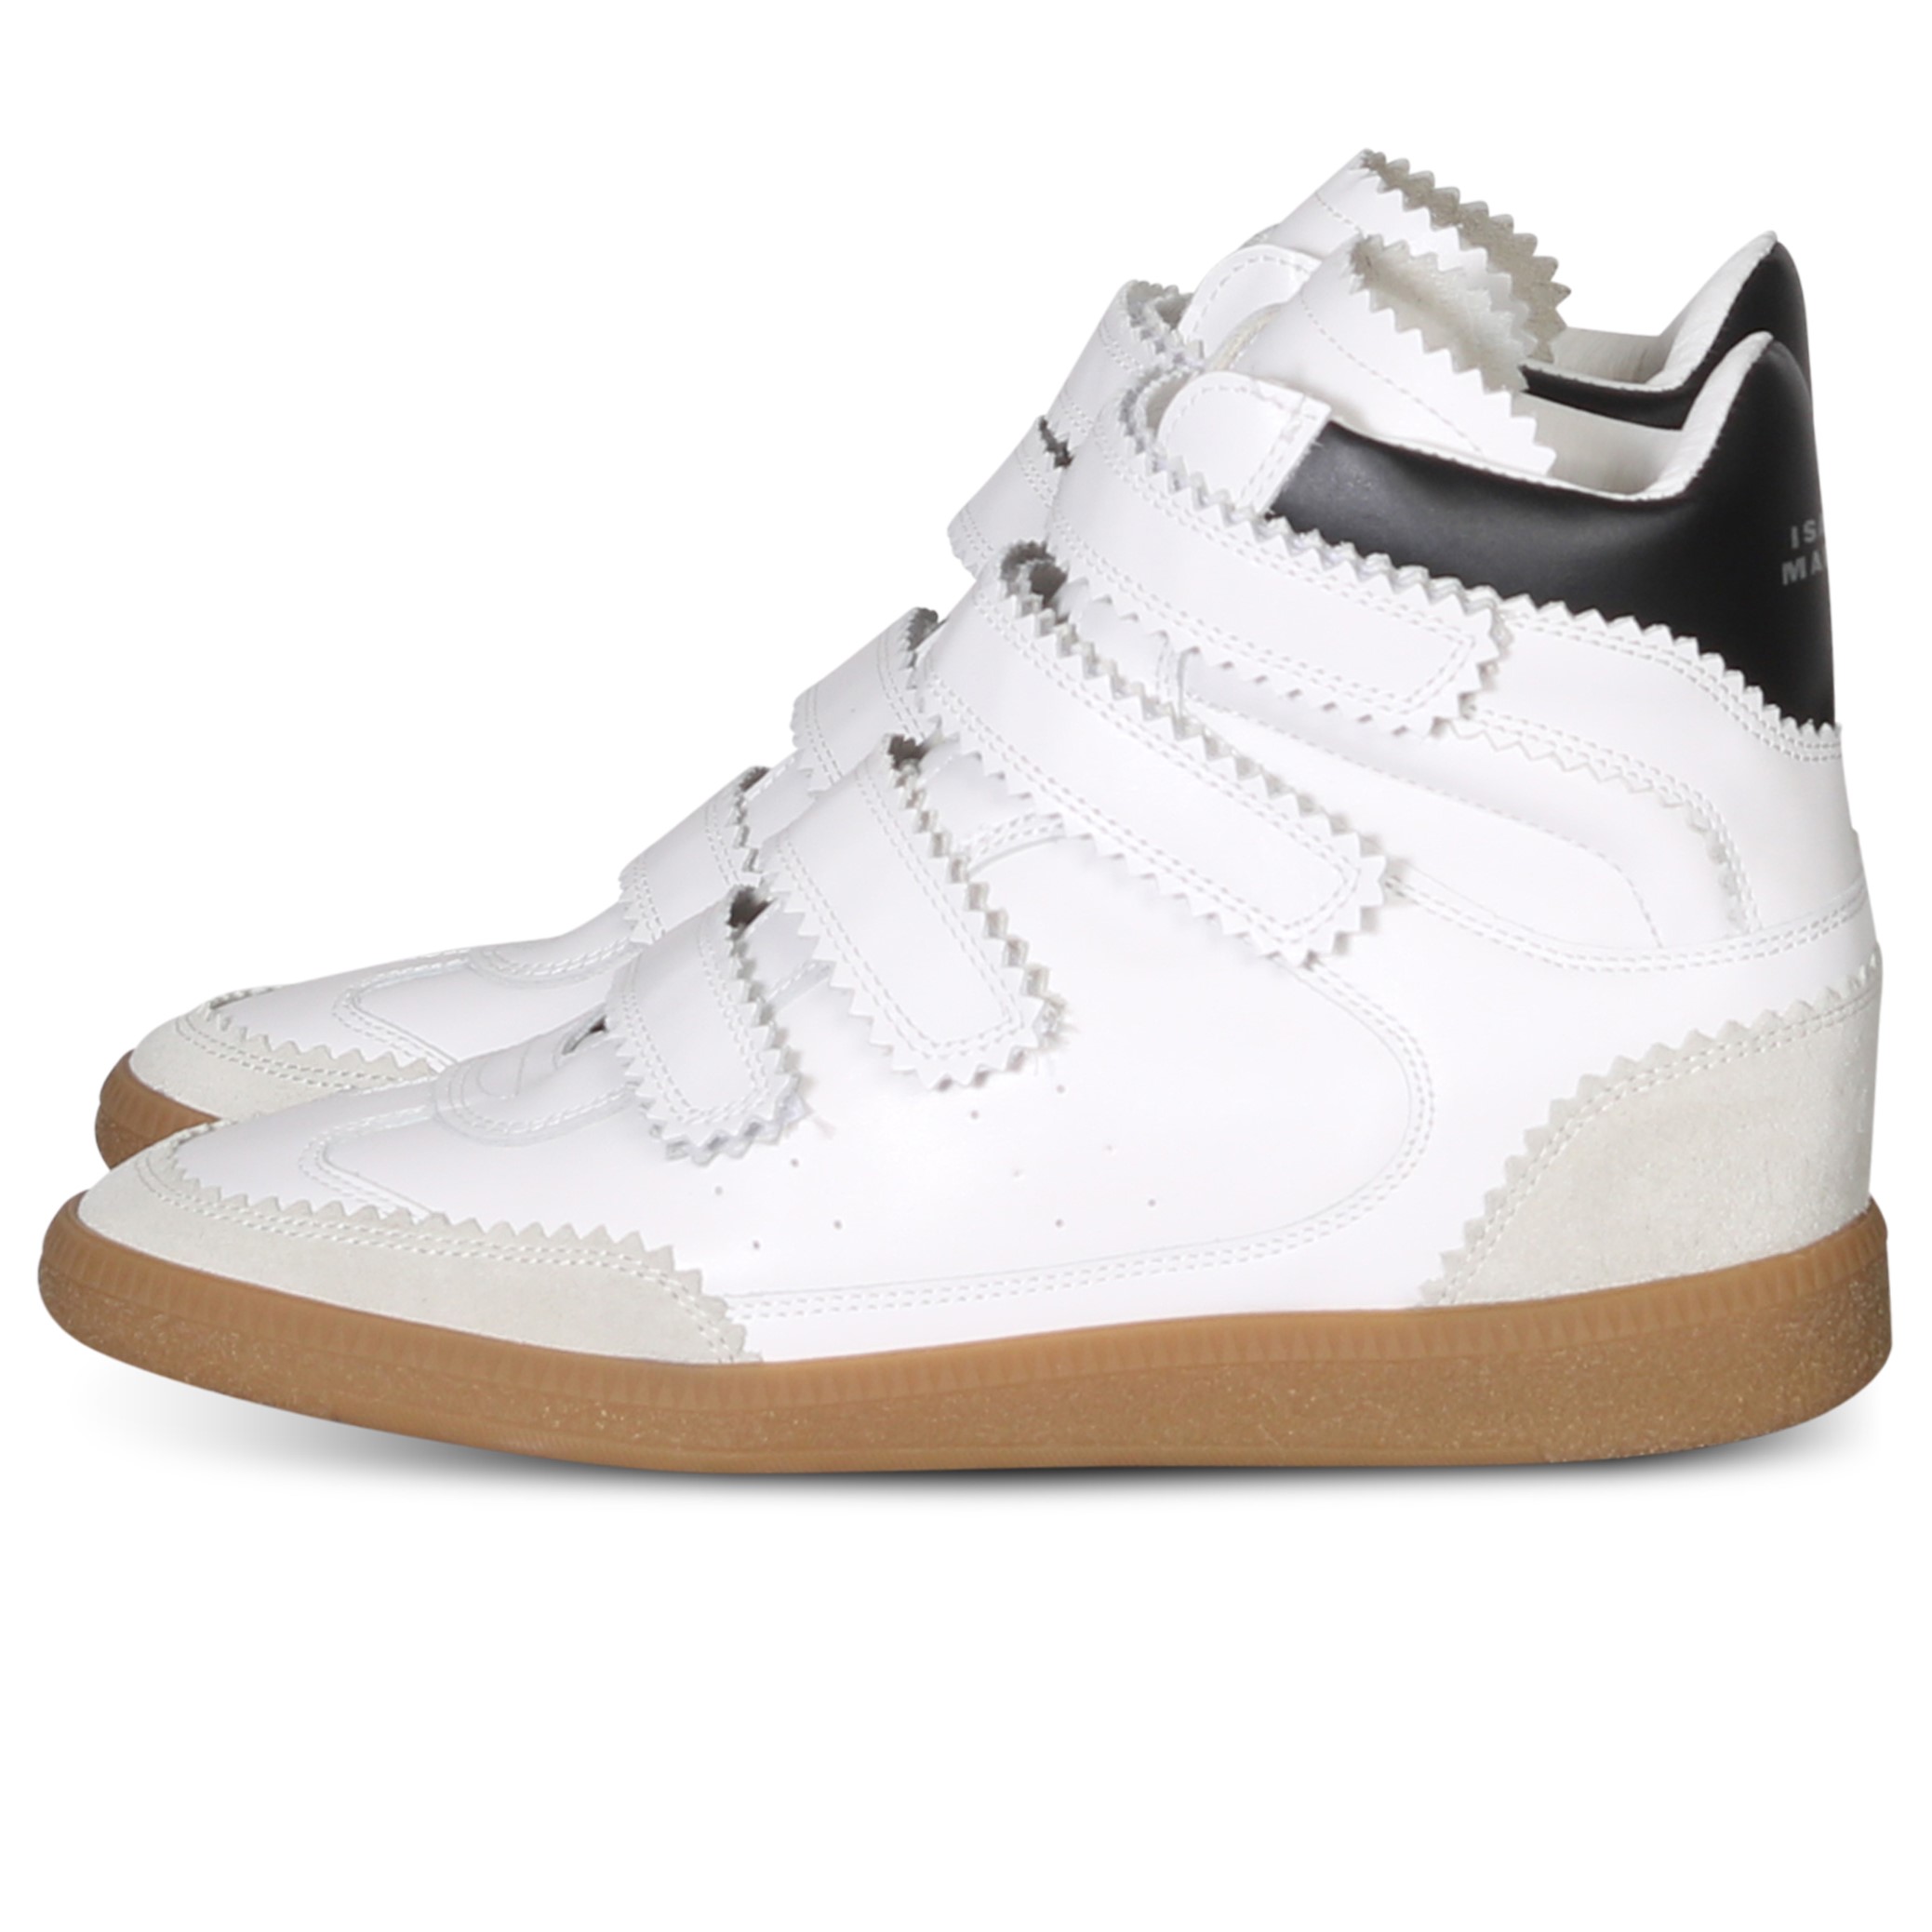 ISABEL MARANT Bilsy Sneaker in White 40